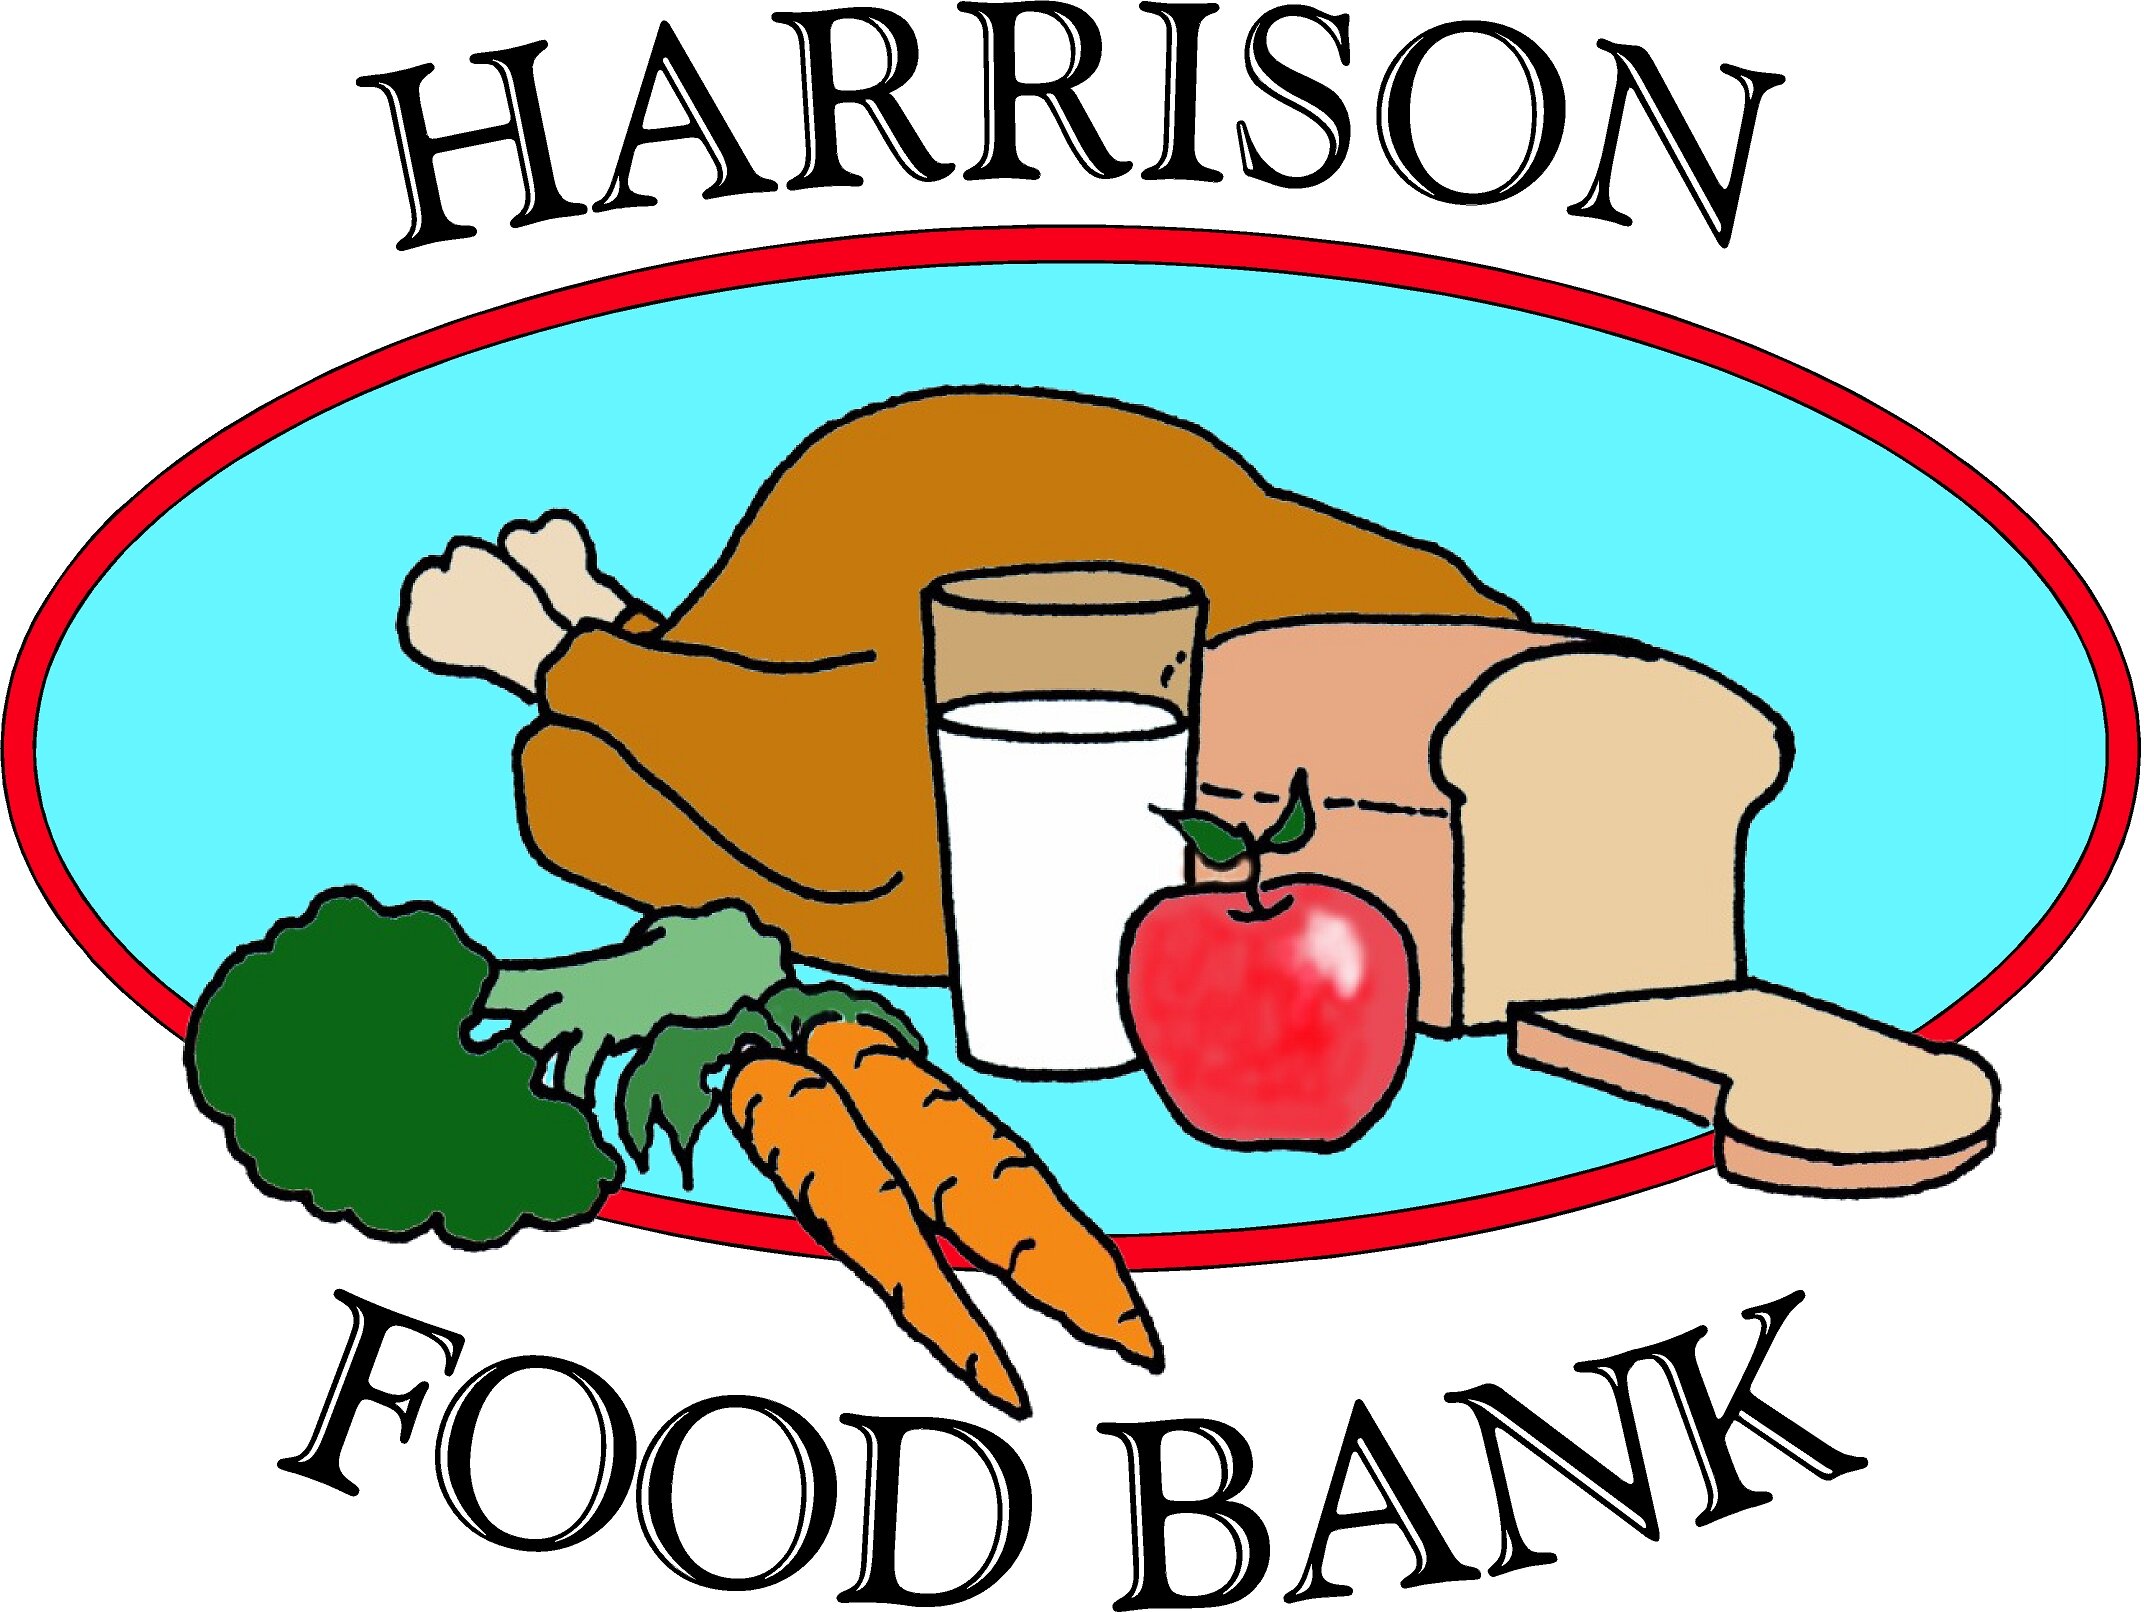 Harrison Food Bank